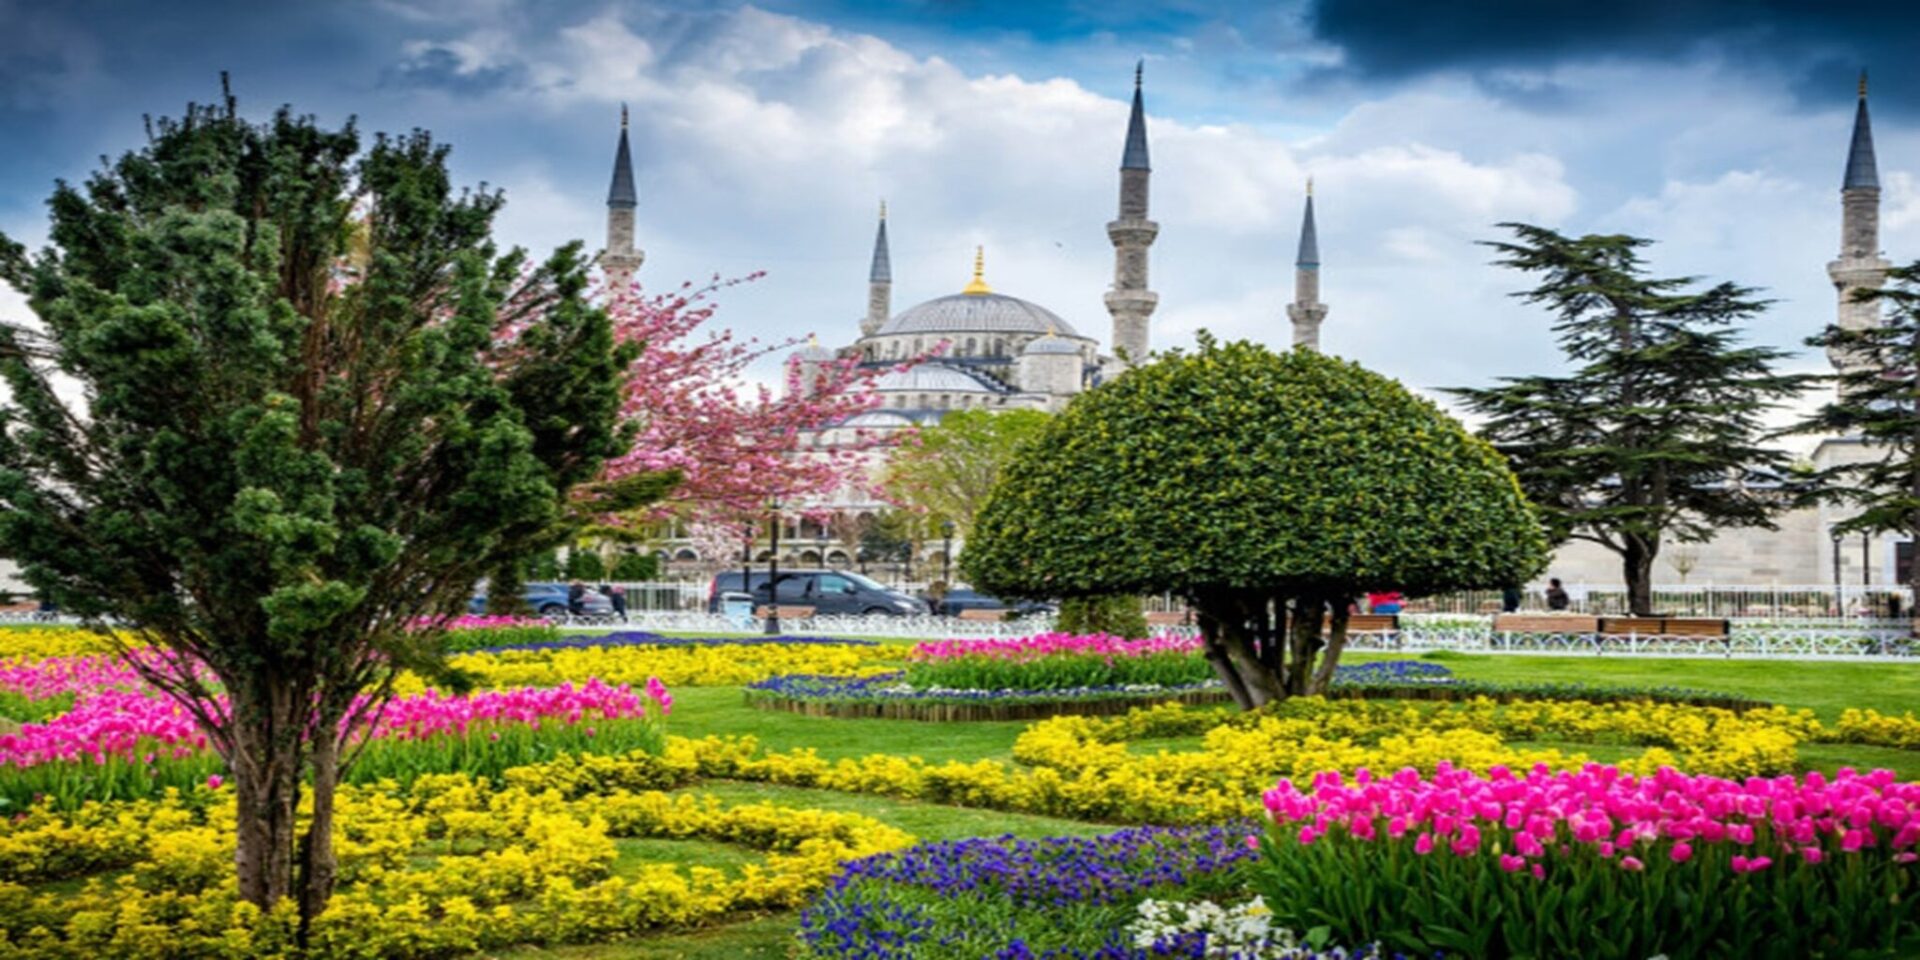 istanbul flower festival min 2048x1024 1 ادویه های معروف استانبول